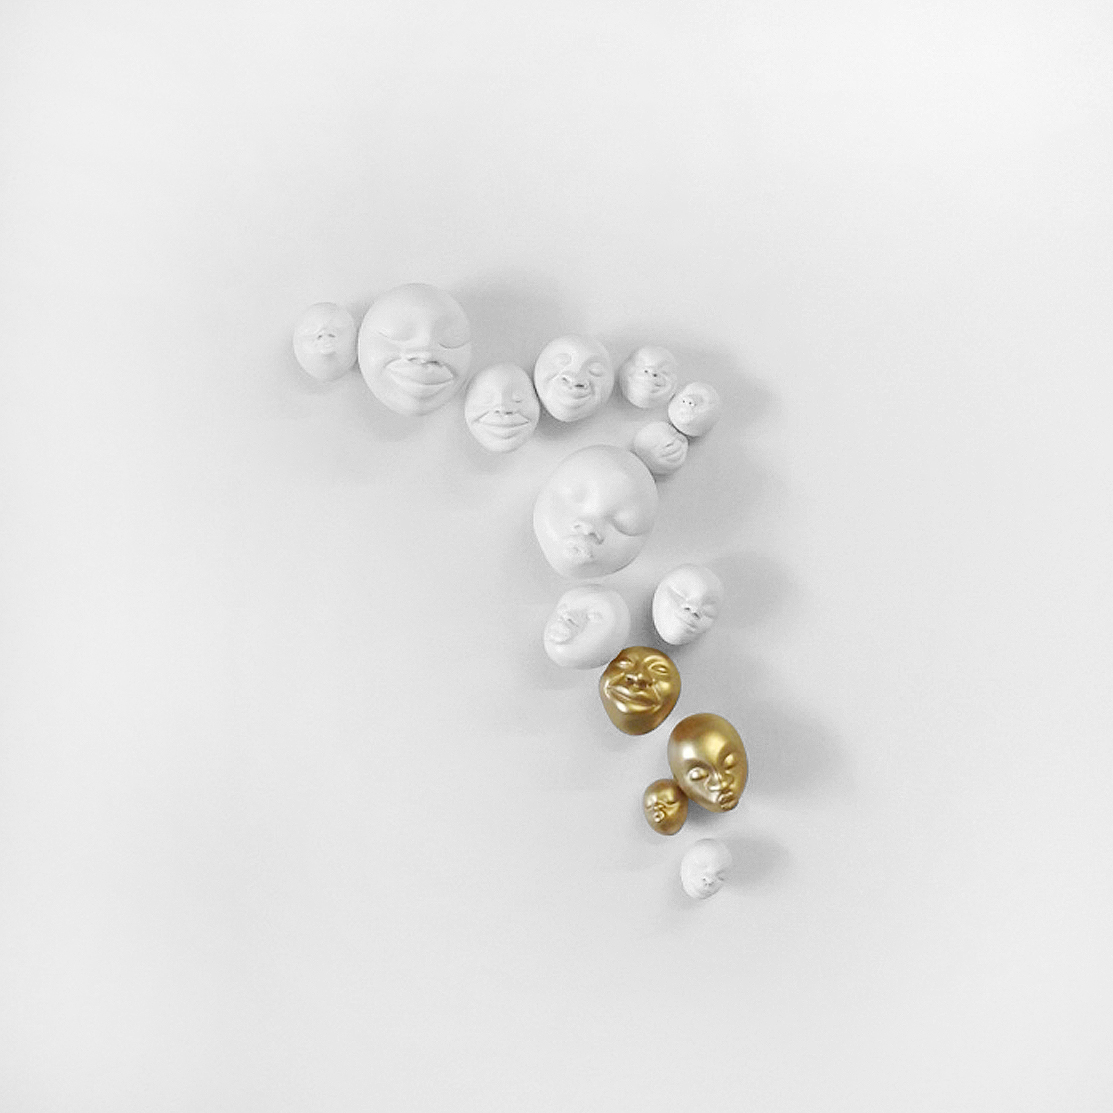 CORES DA TERRA Happy Faces by Selma Calheira Ceramic Wall Design 14pcs White-Gold